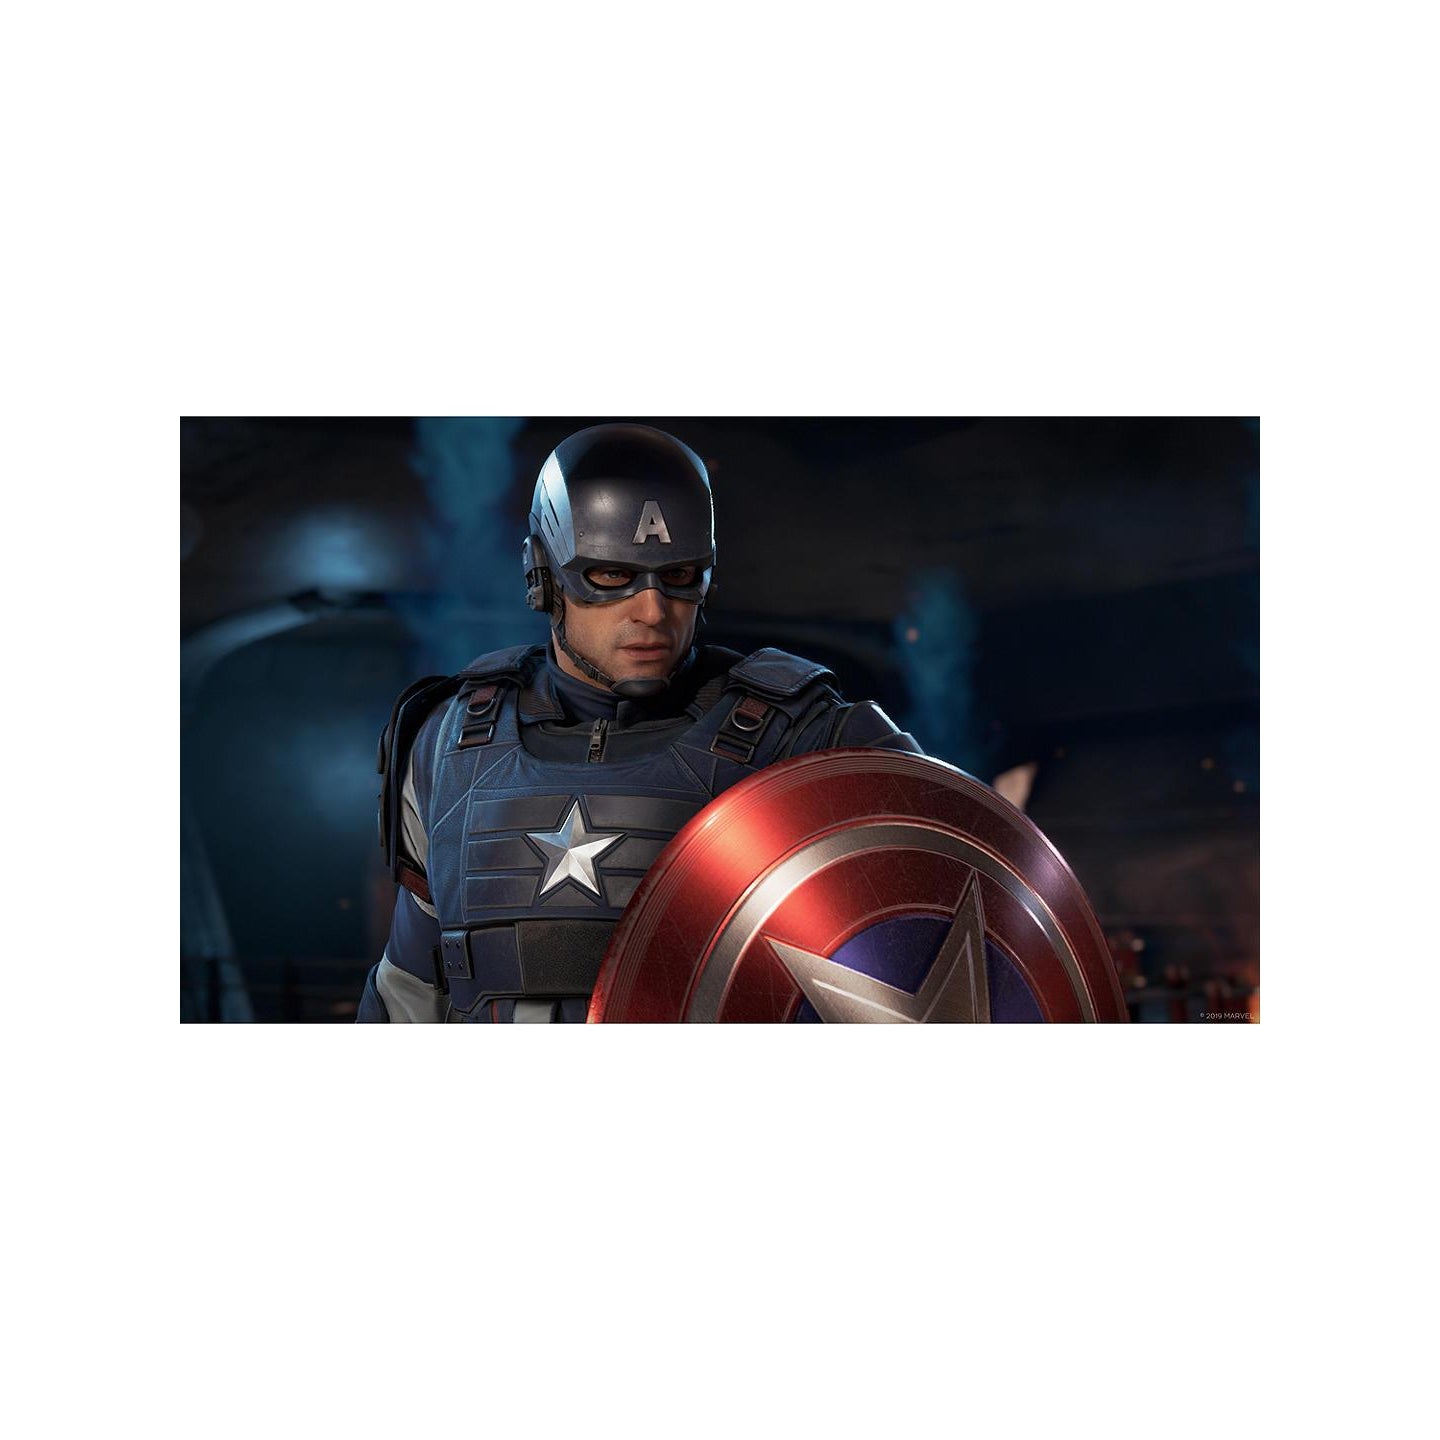 Marvel's Avengers, PlayStation 4 Game